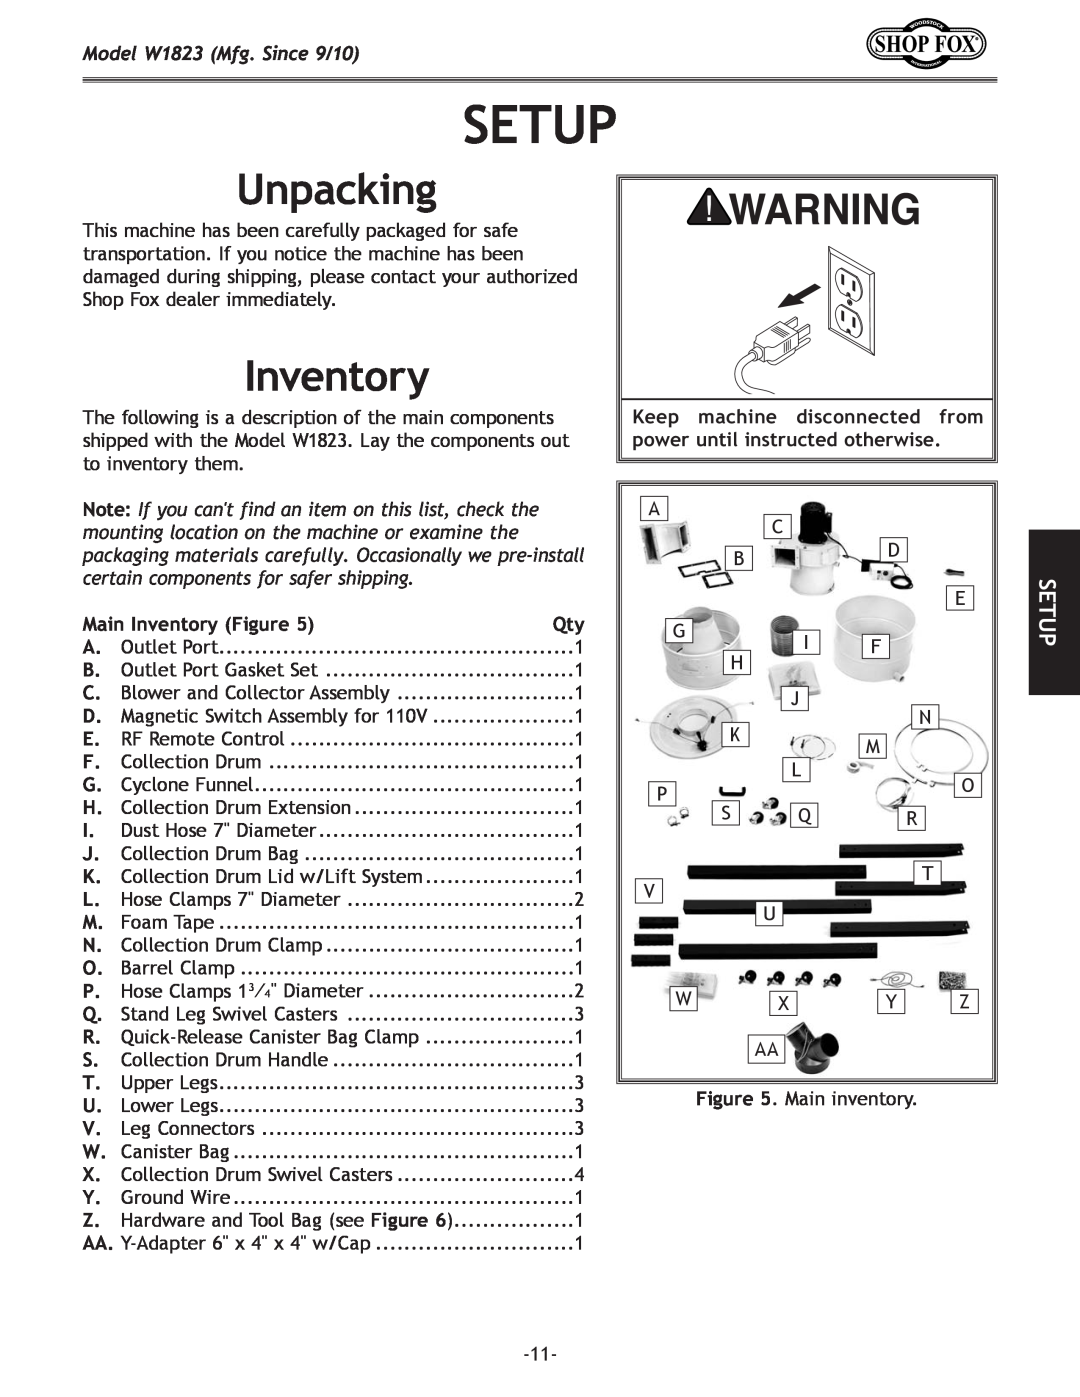 Woodstock manual Setup, Unpacking, Inventory, Model W1823 Mfg. Since 9/10 